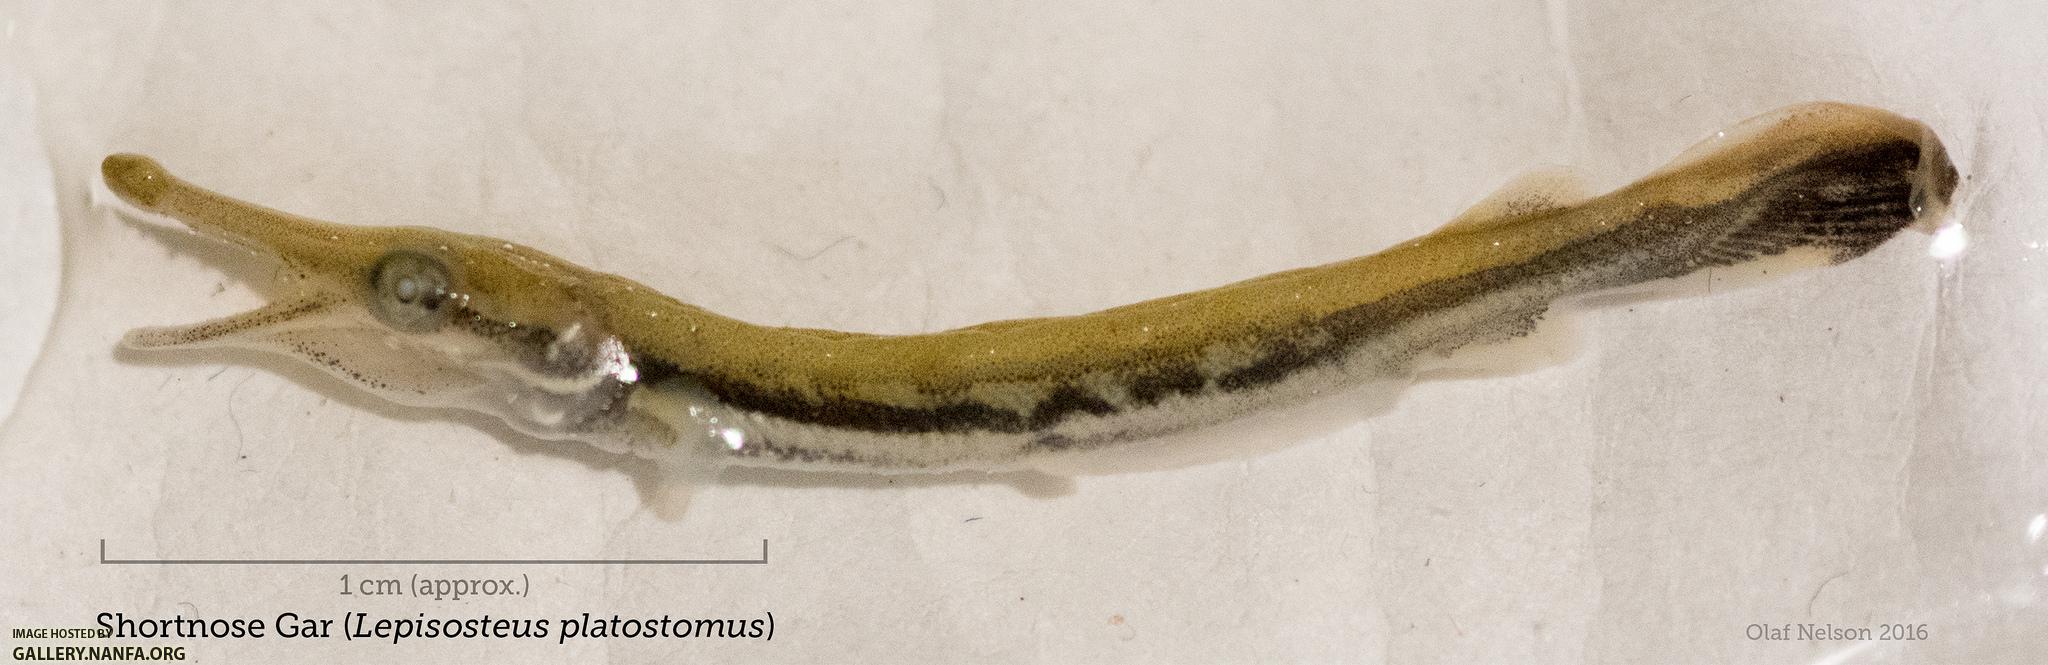 Young-of-the-year Shortnose Gar (Lepisosteus platostomus)